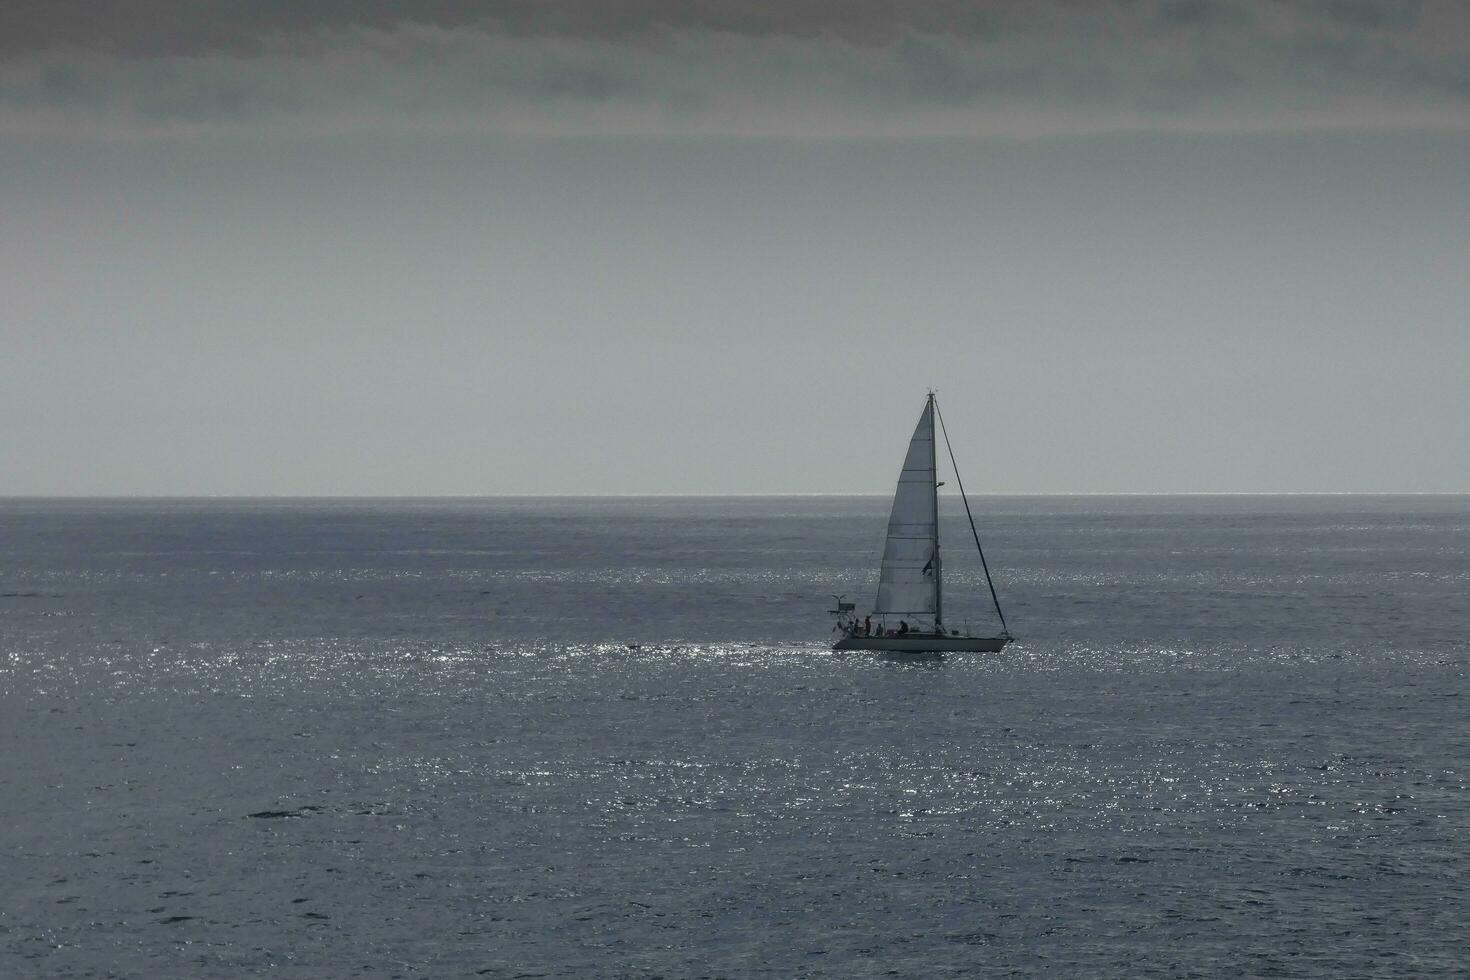 Sailboat with sail unfurled, sailing on the calm sea at sunset. photo